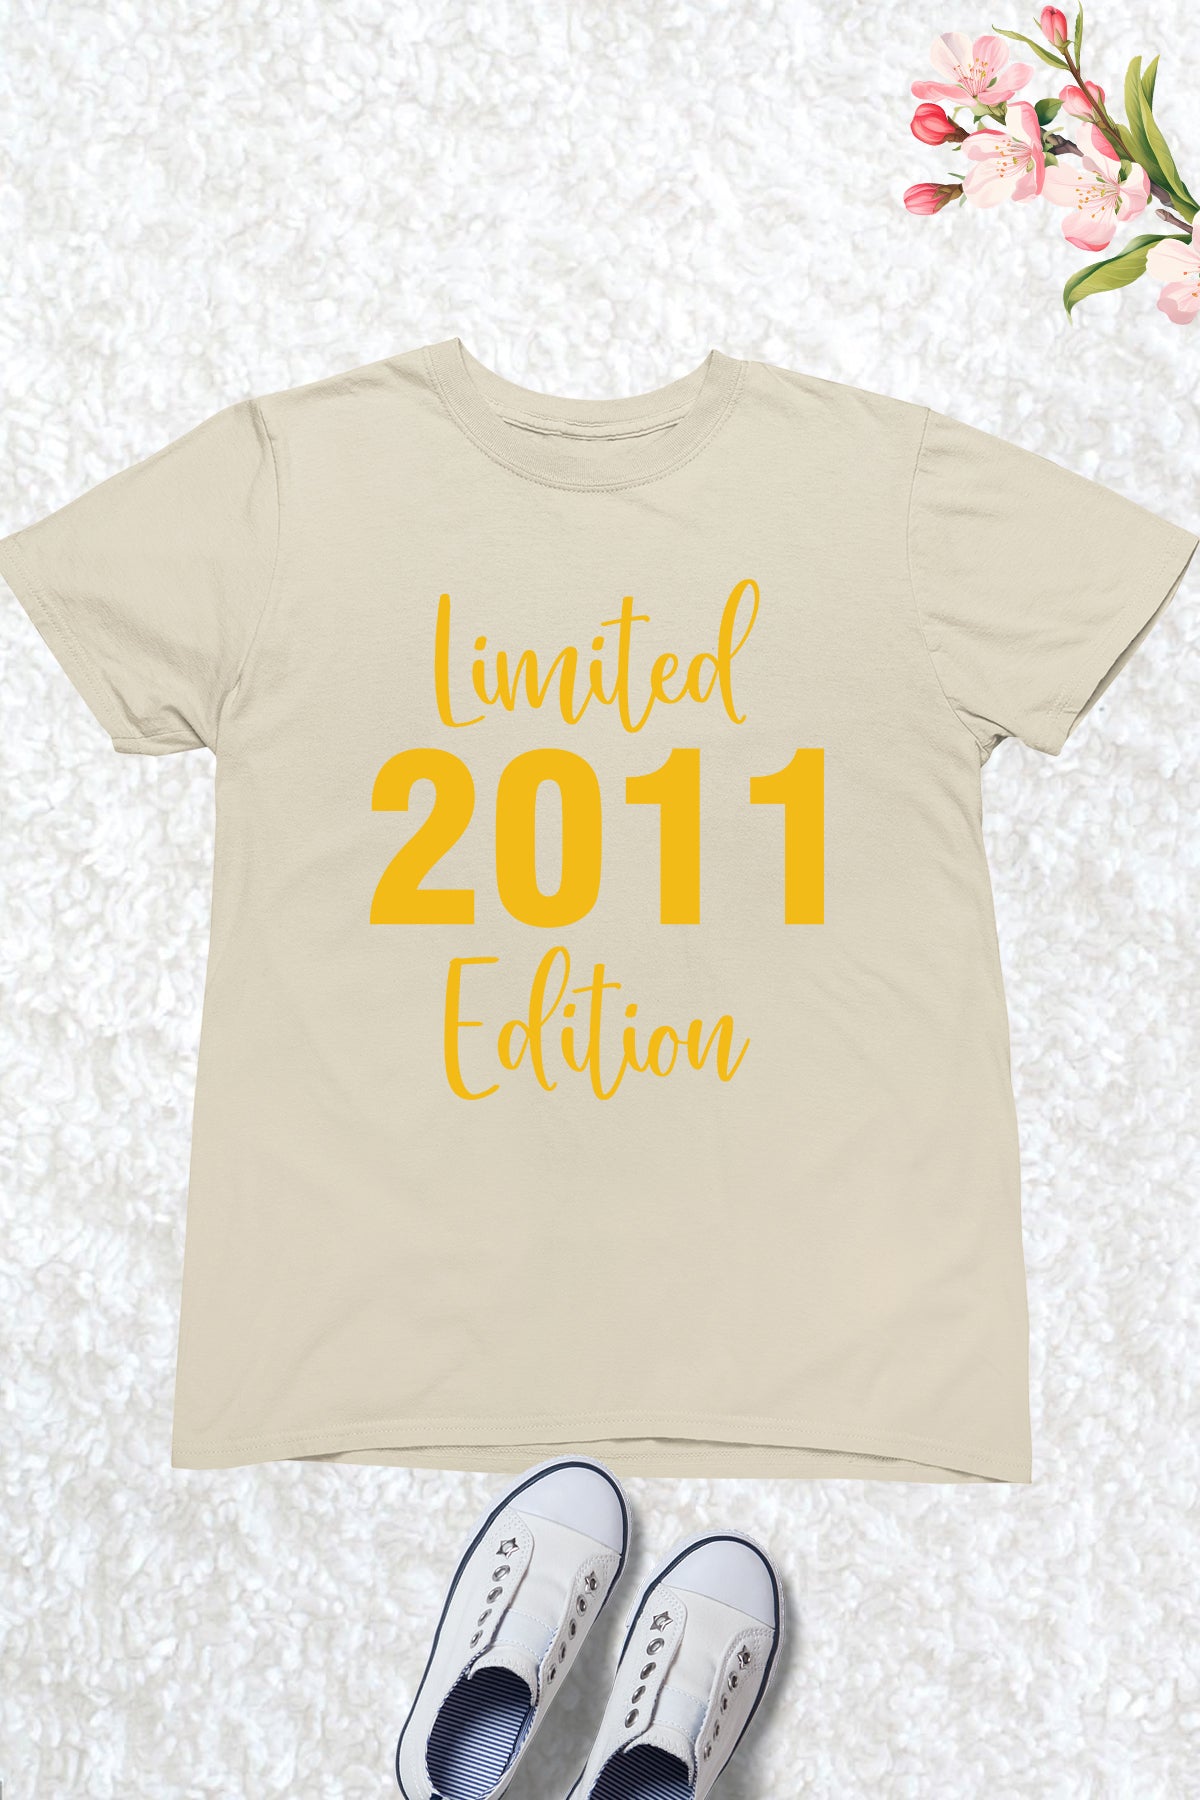 Limited 2011 Edition 13th Birthday Shirts